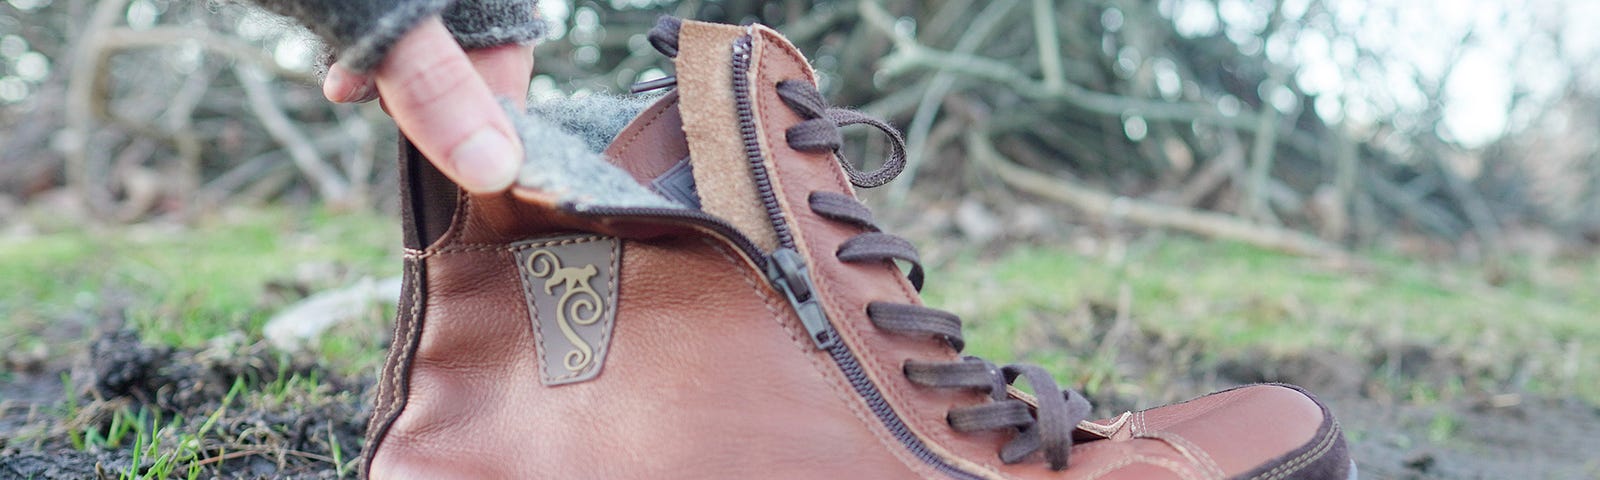 Magical Alaskan: Lightweight Barefoot Boots For Winter Casual